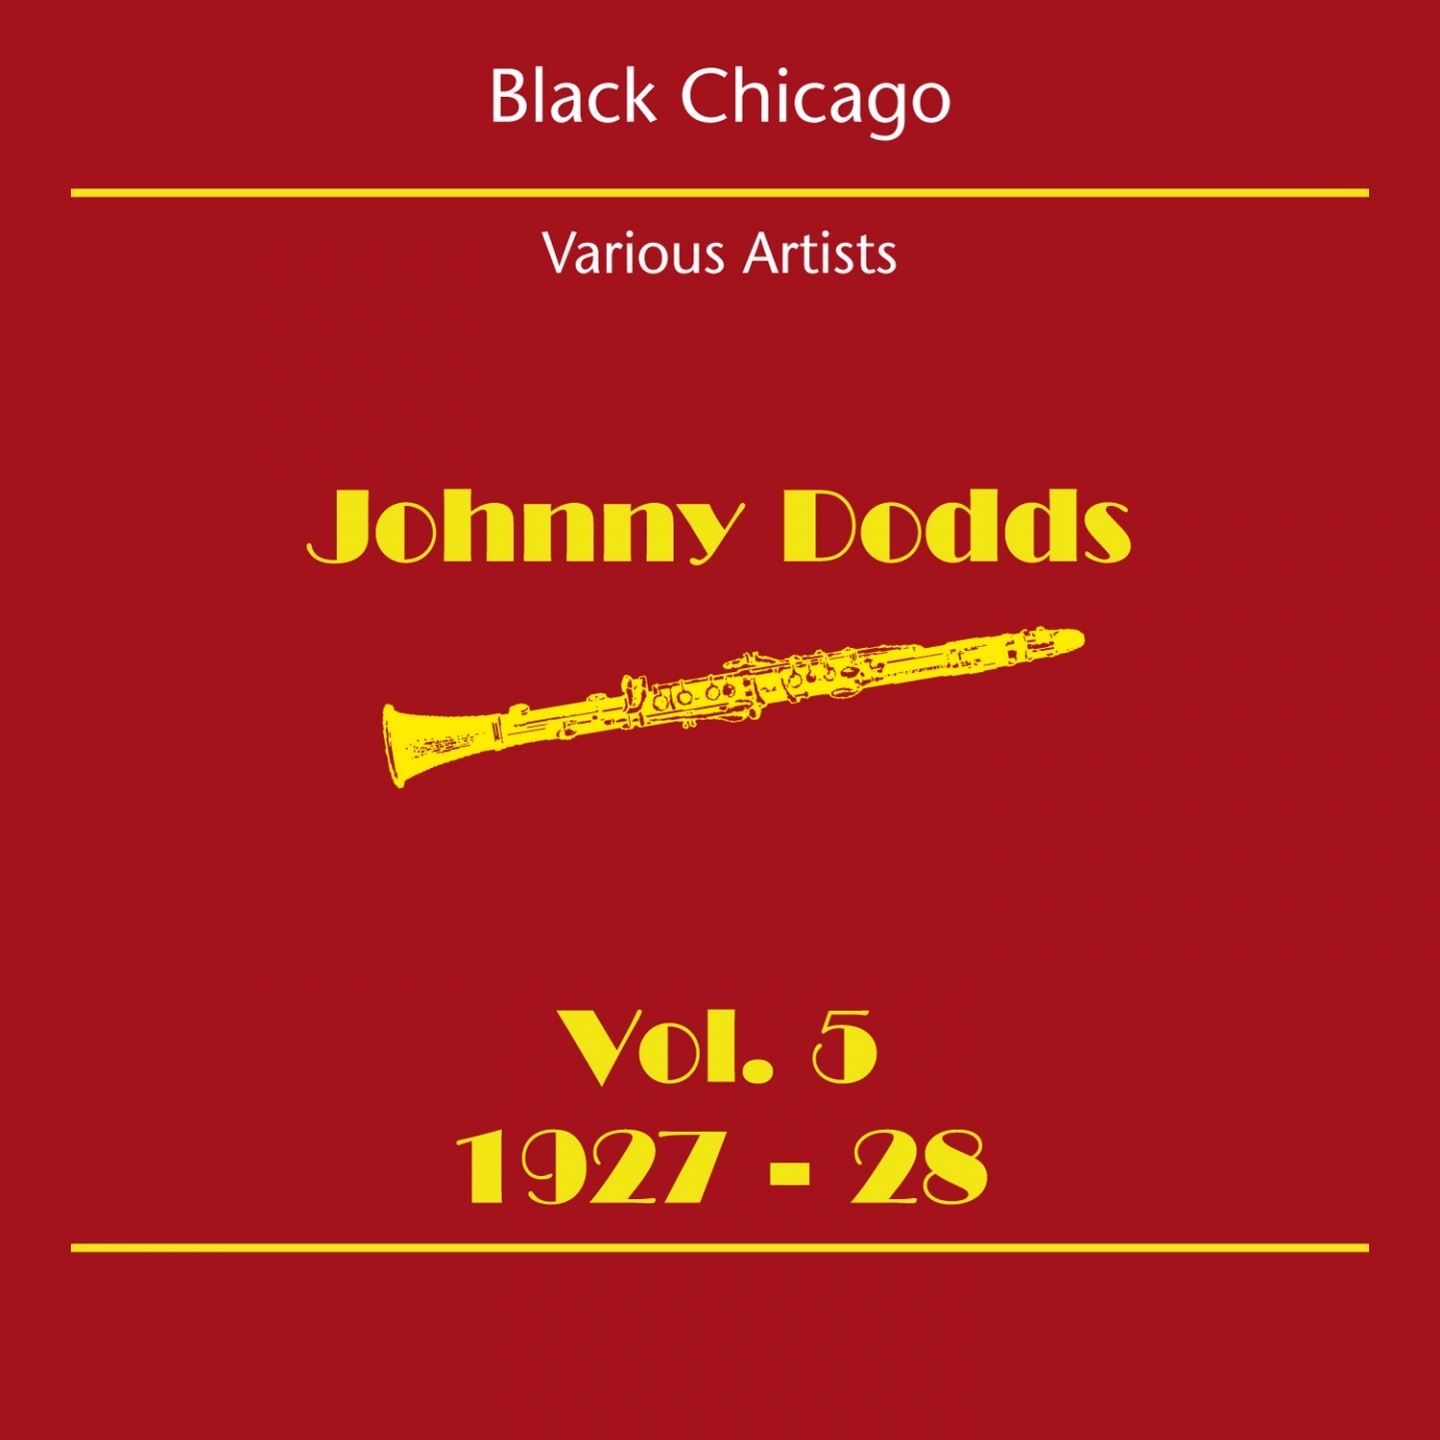 Black Chicago (Johnny Dodds Volume 5 1927-28)